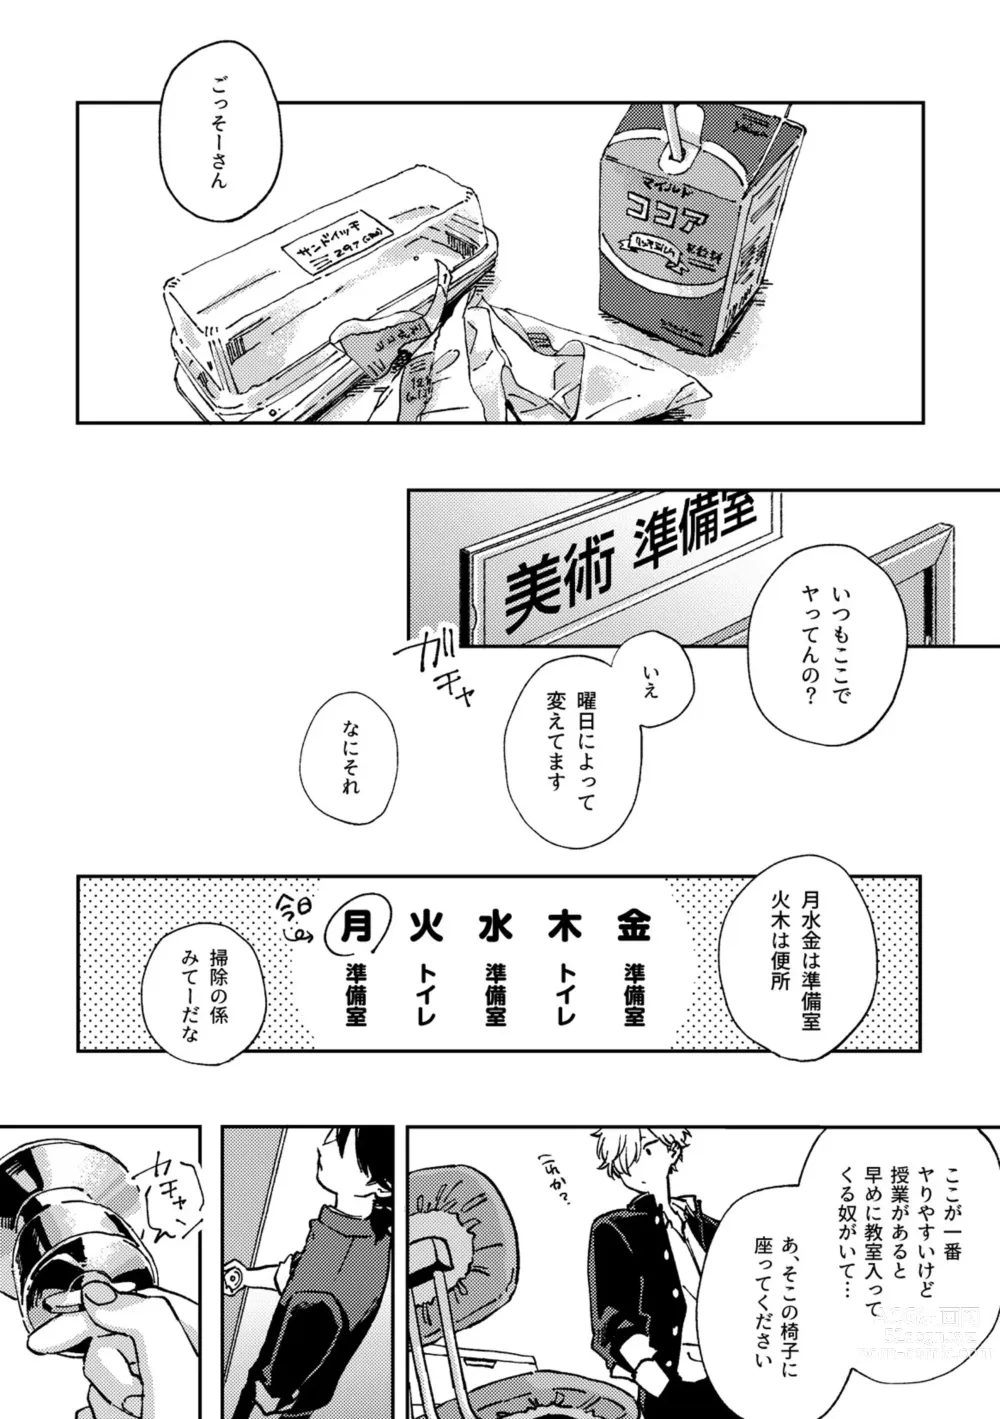 Page 7 of doujinshi IN ONE WEEK